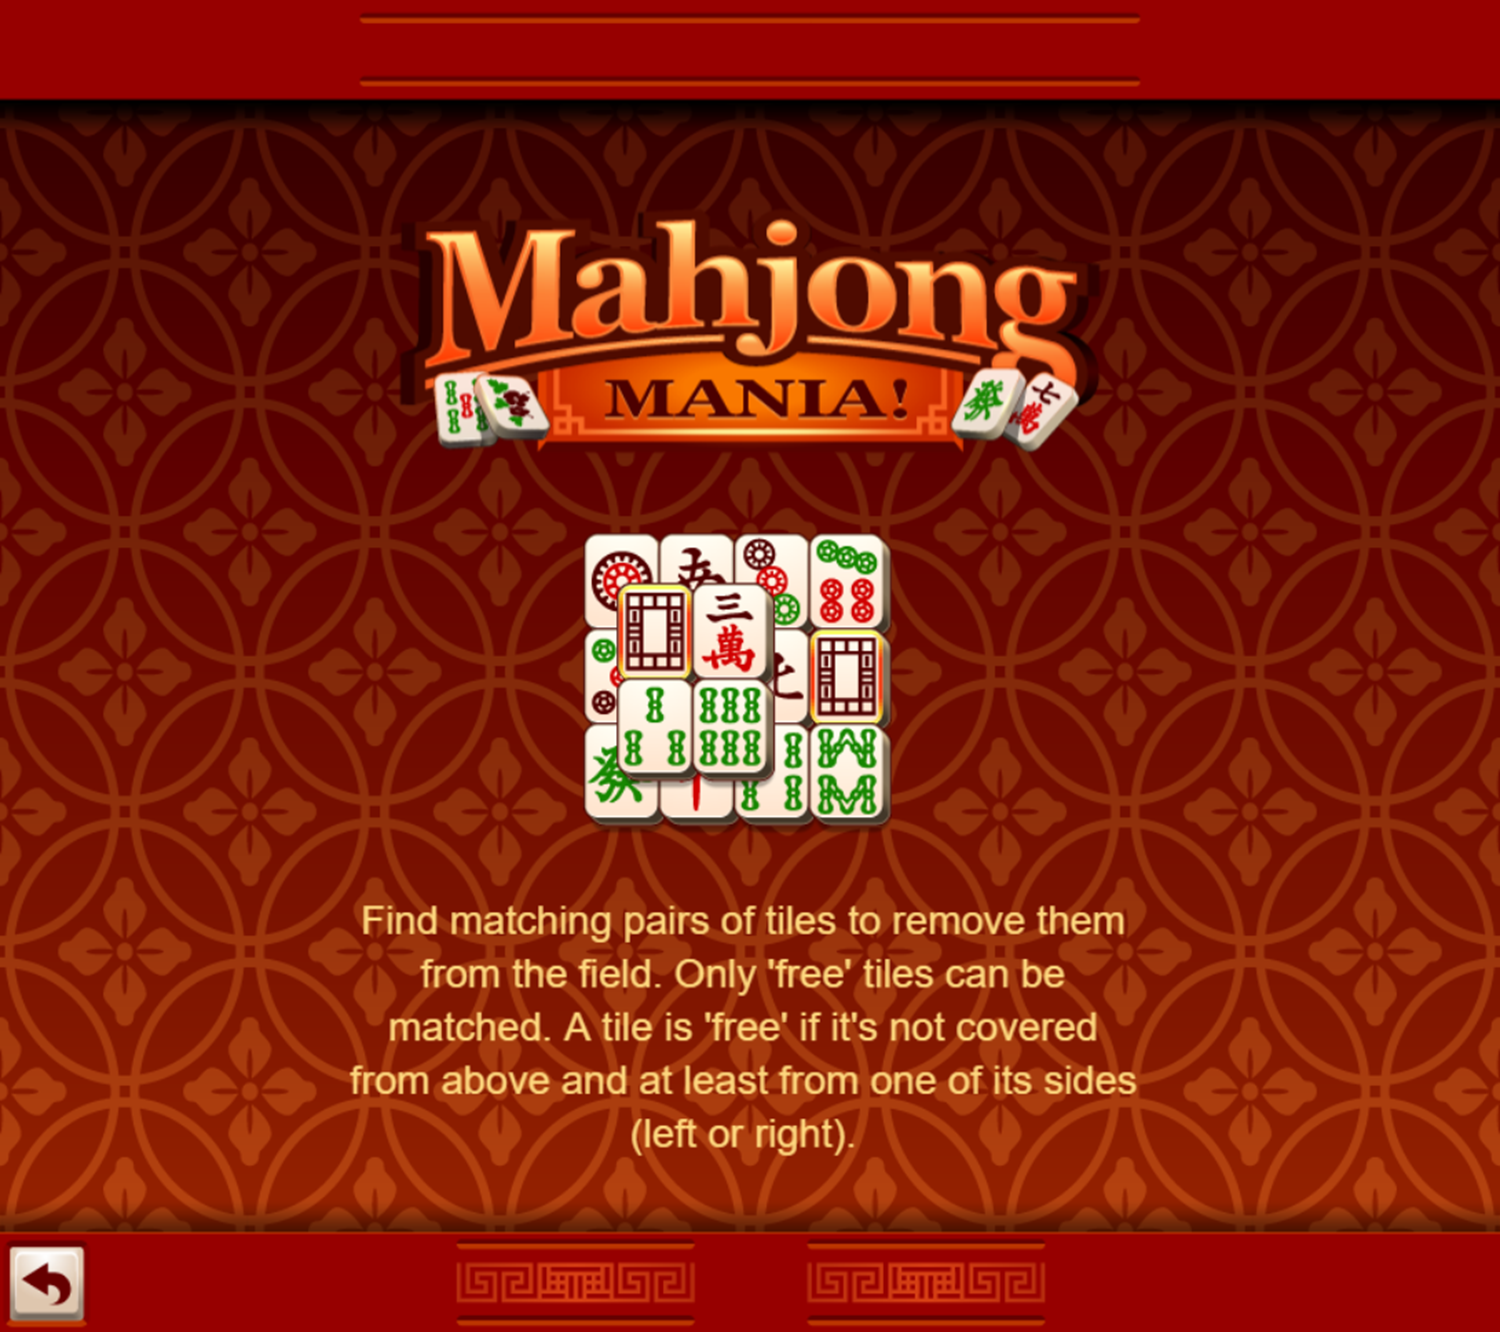 Mahjong Mania Game Instructions Screenshot.